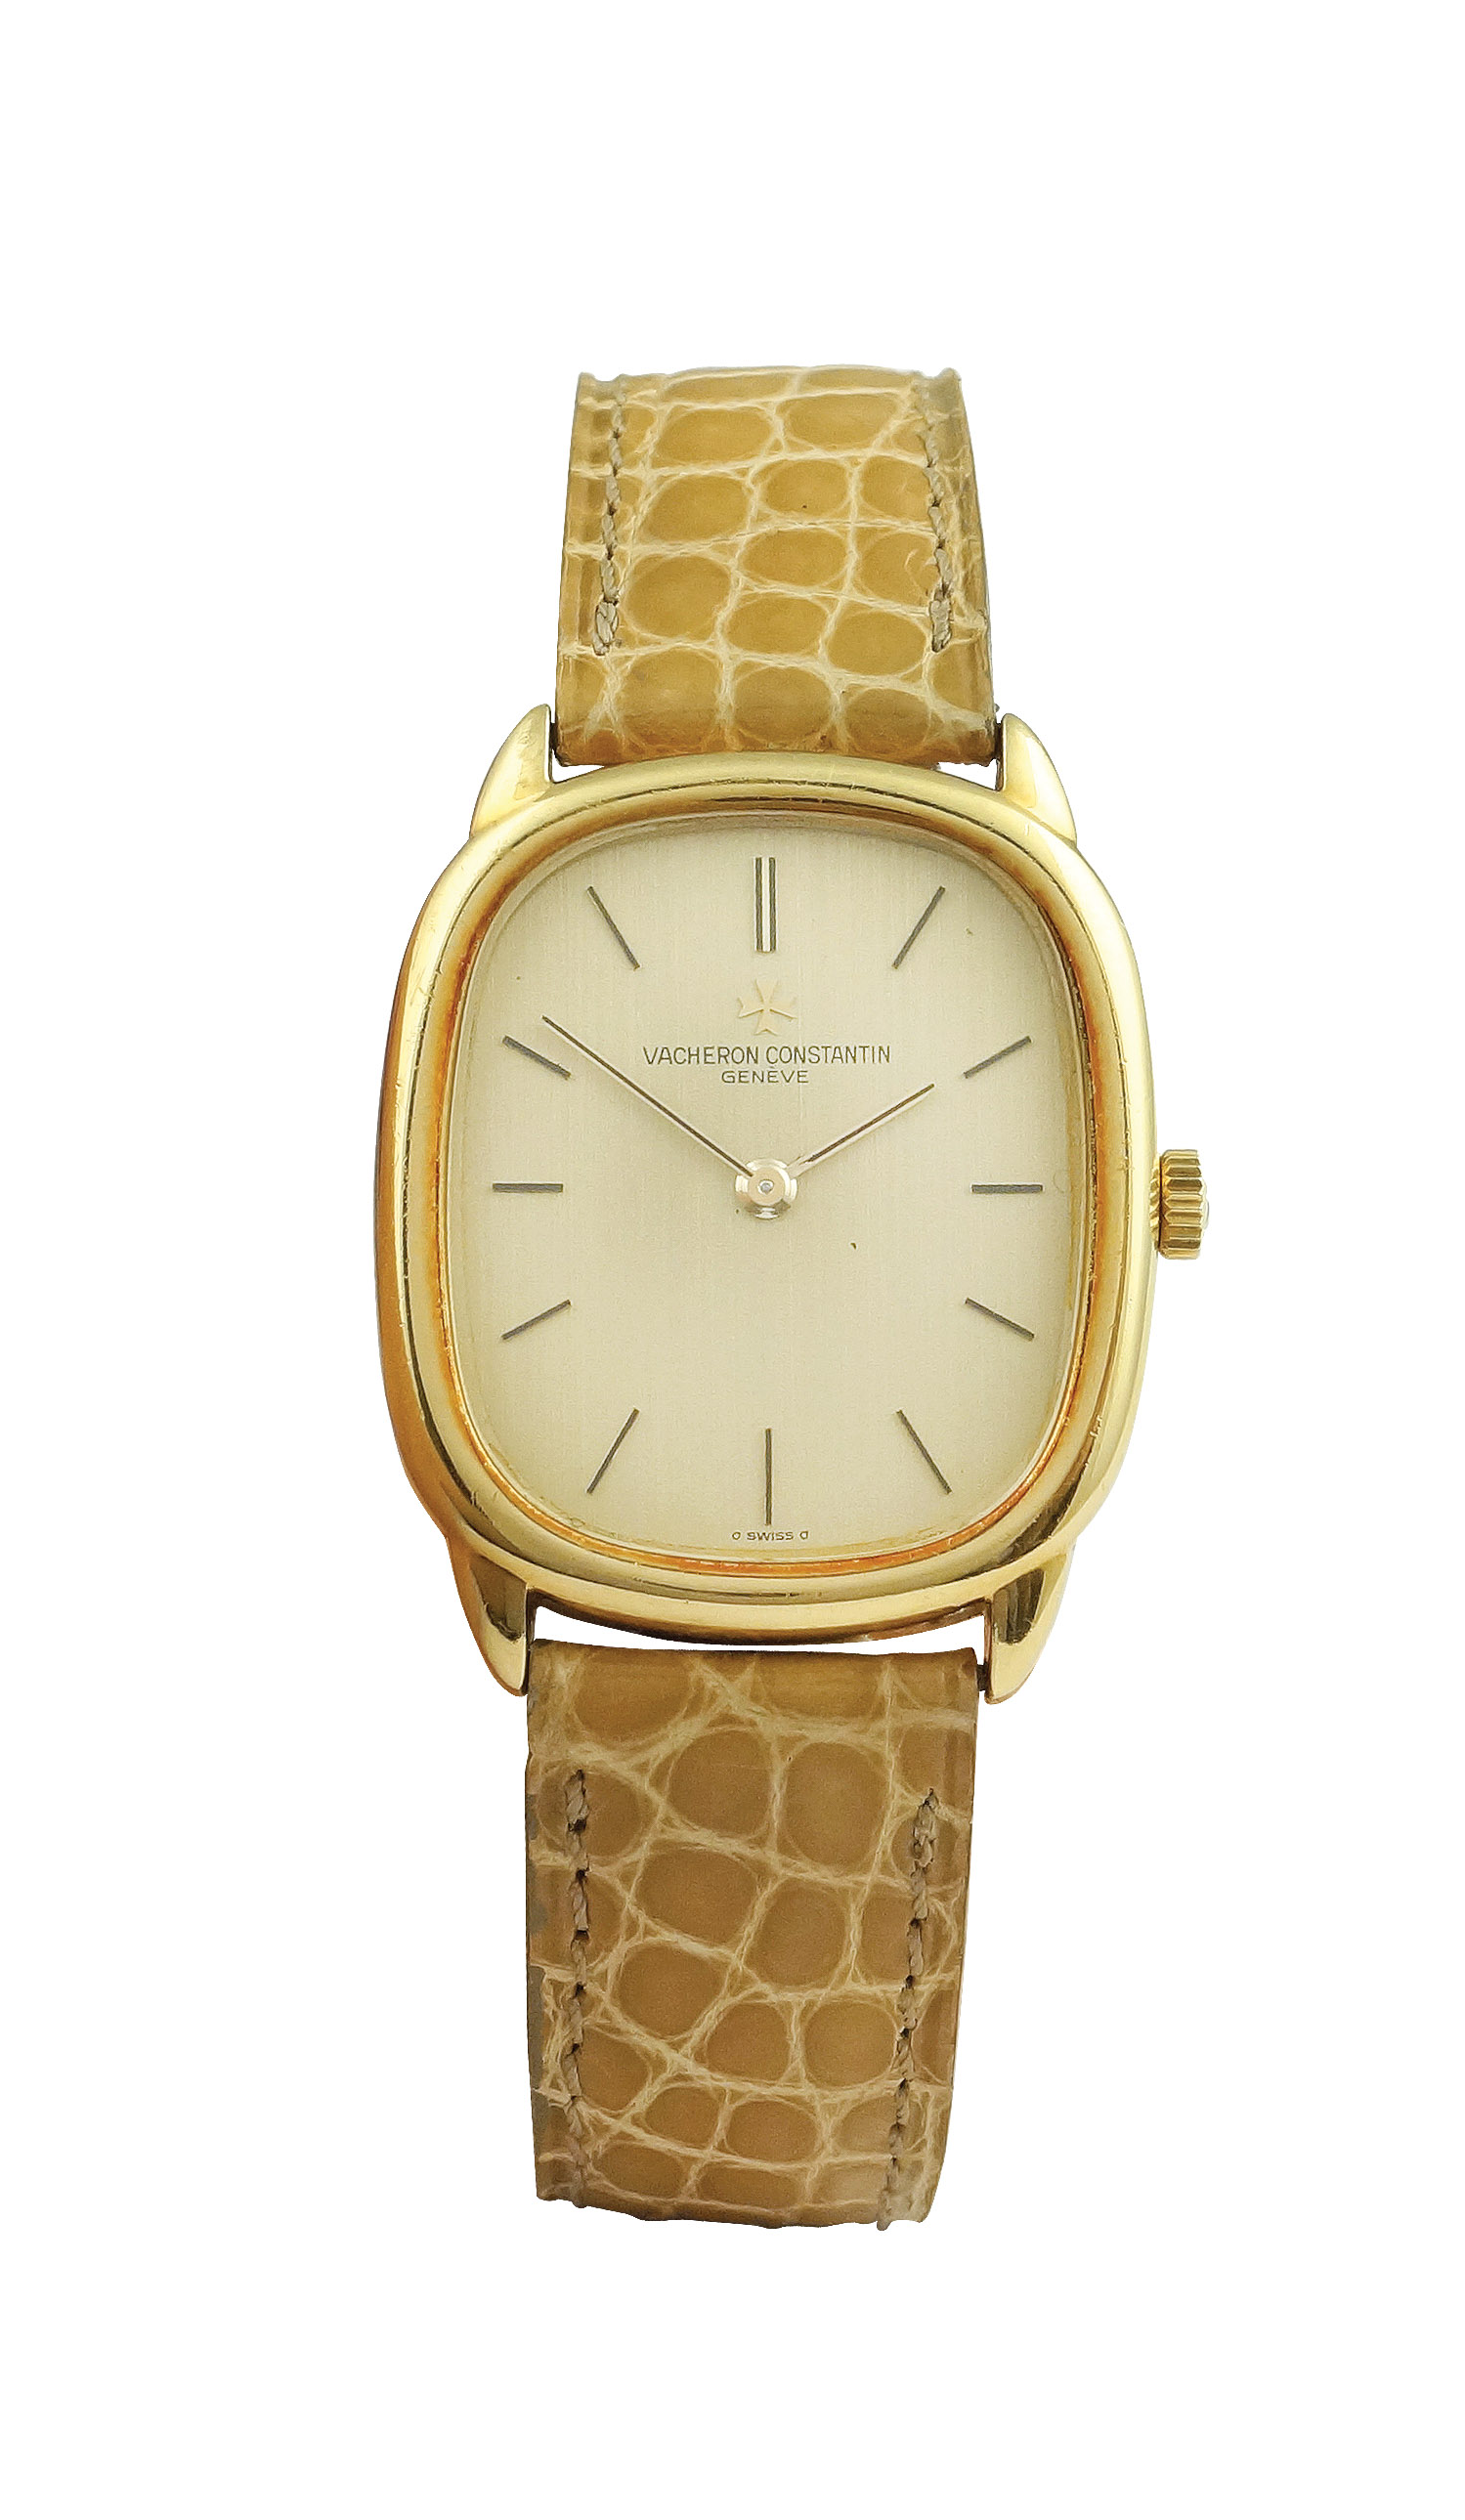 A Vacheron Constantin vintage wrist watch